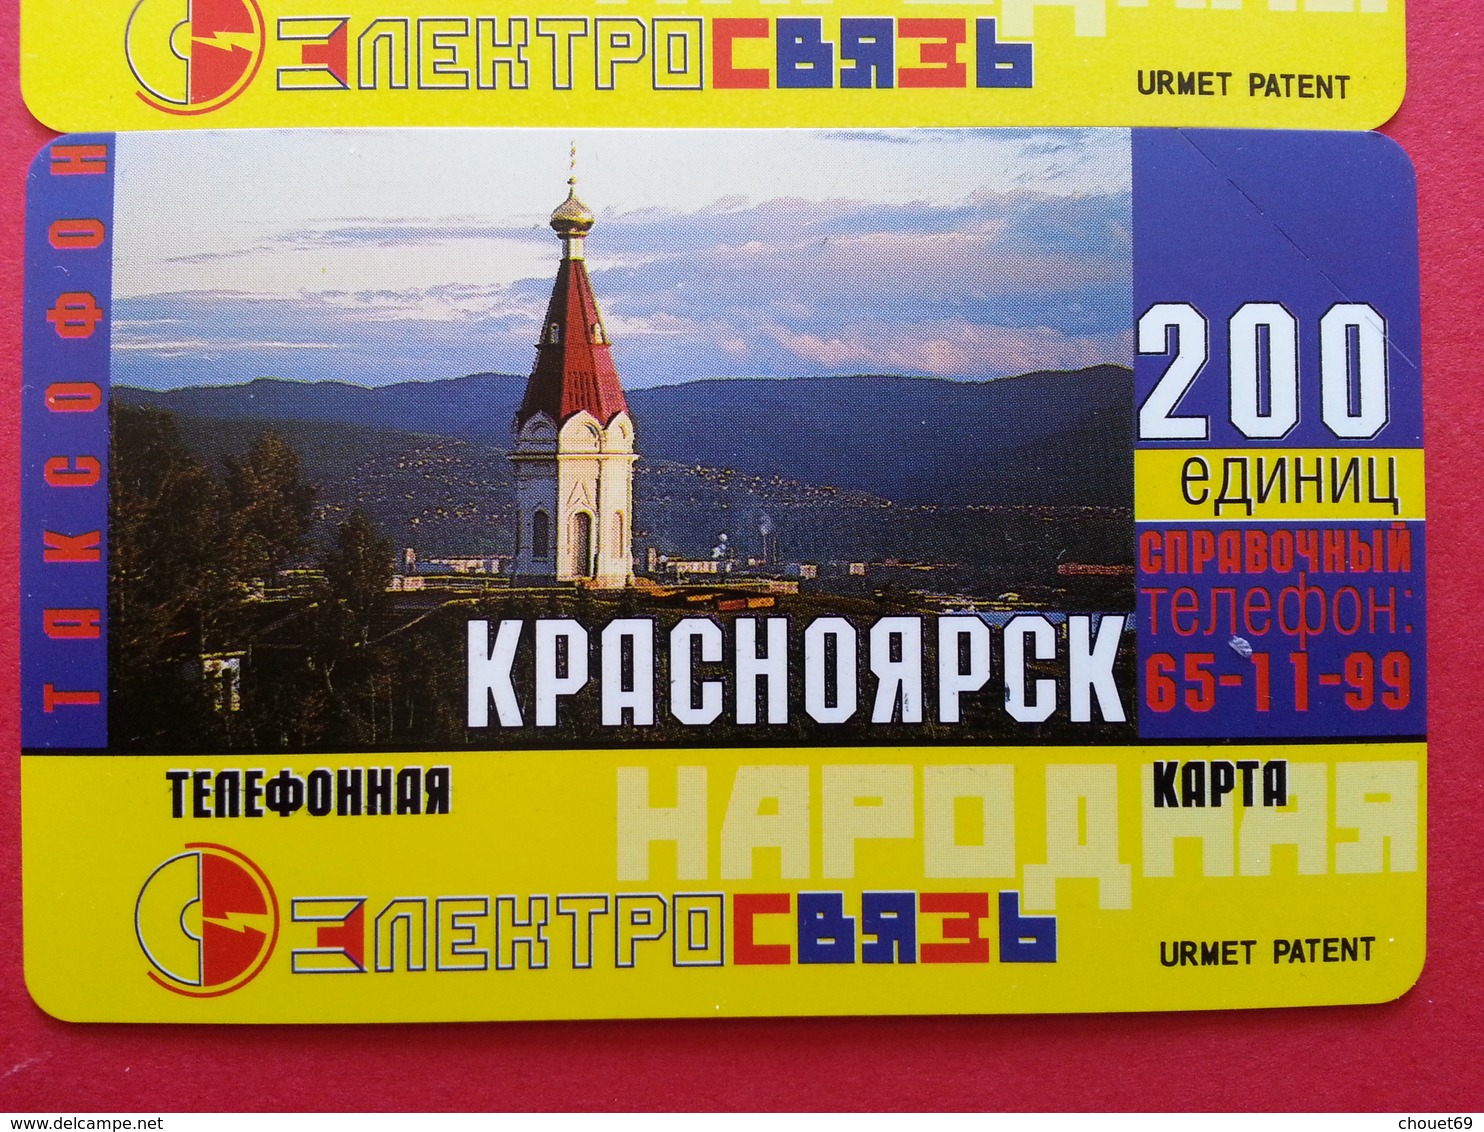 KRASNOYARSK serie 5 CARDS 10+25+50+100+200u VIEW URMET MINT NEUVE RUSSIE URSS (BI1216 KRASNOJARSK